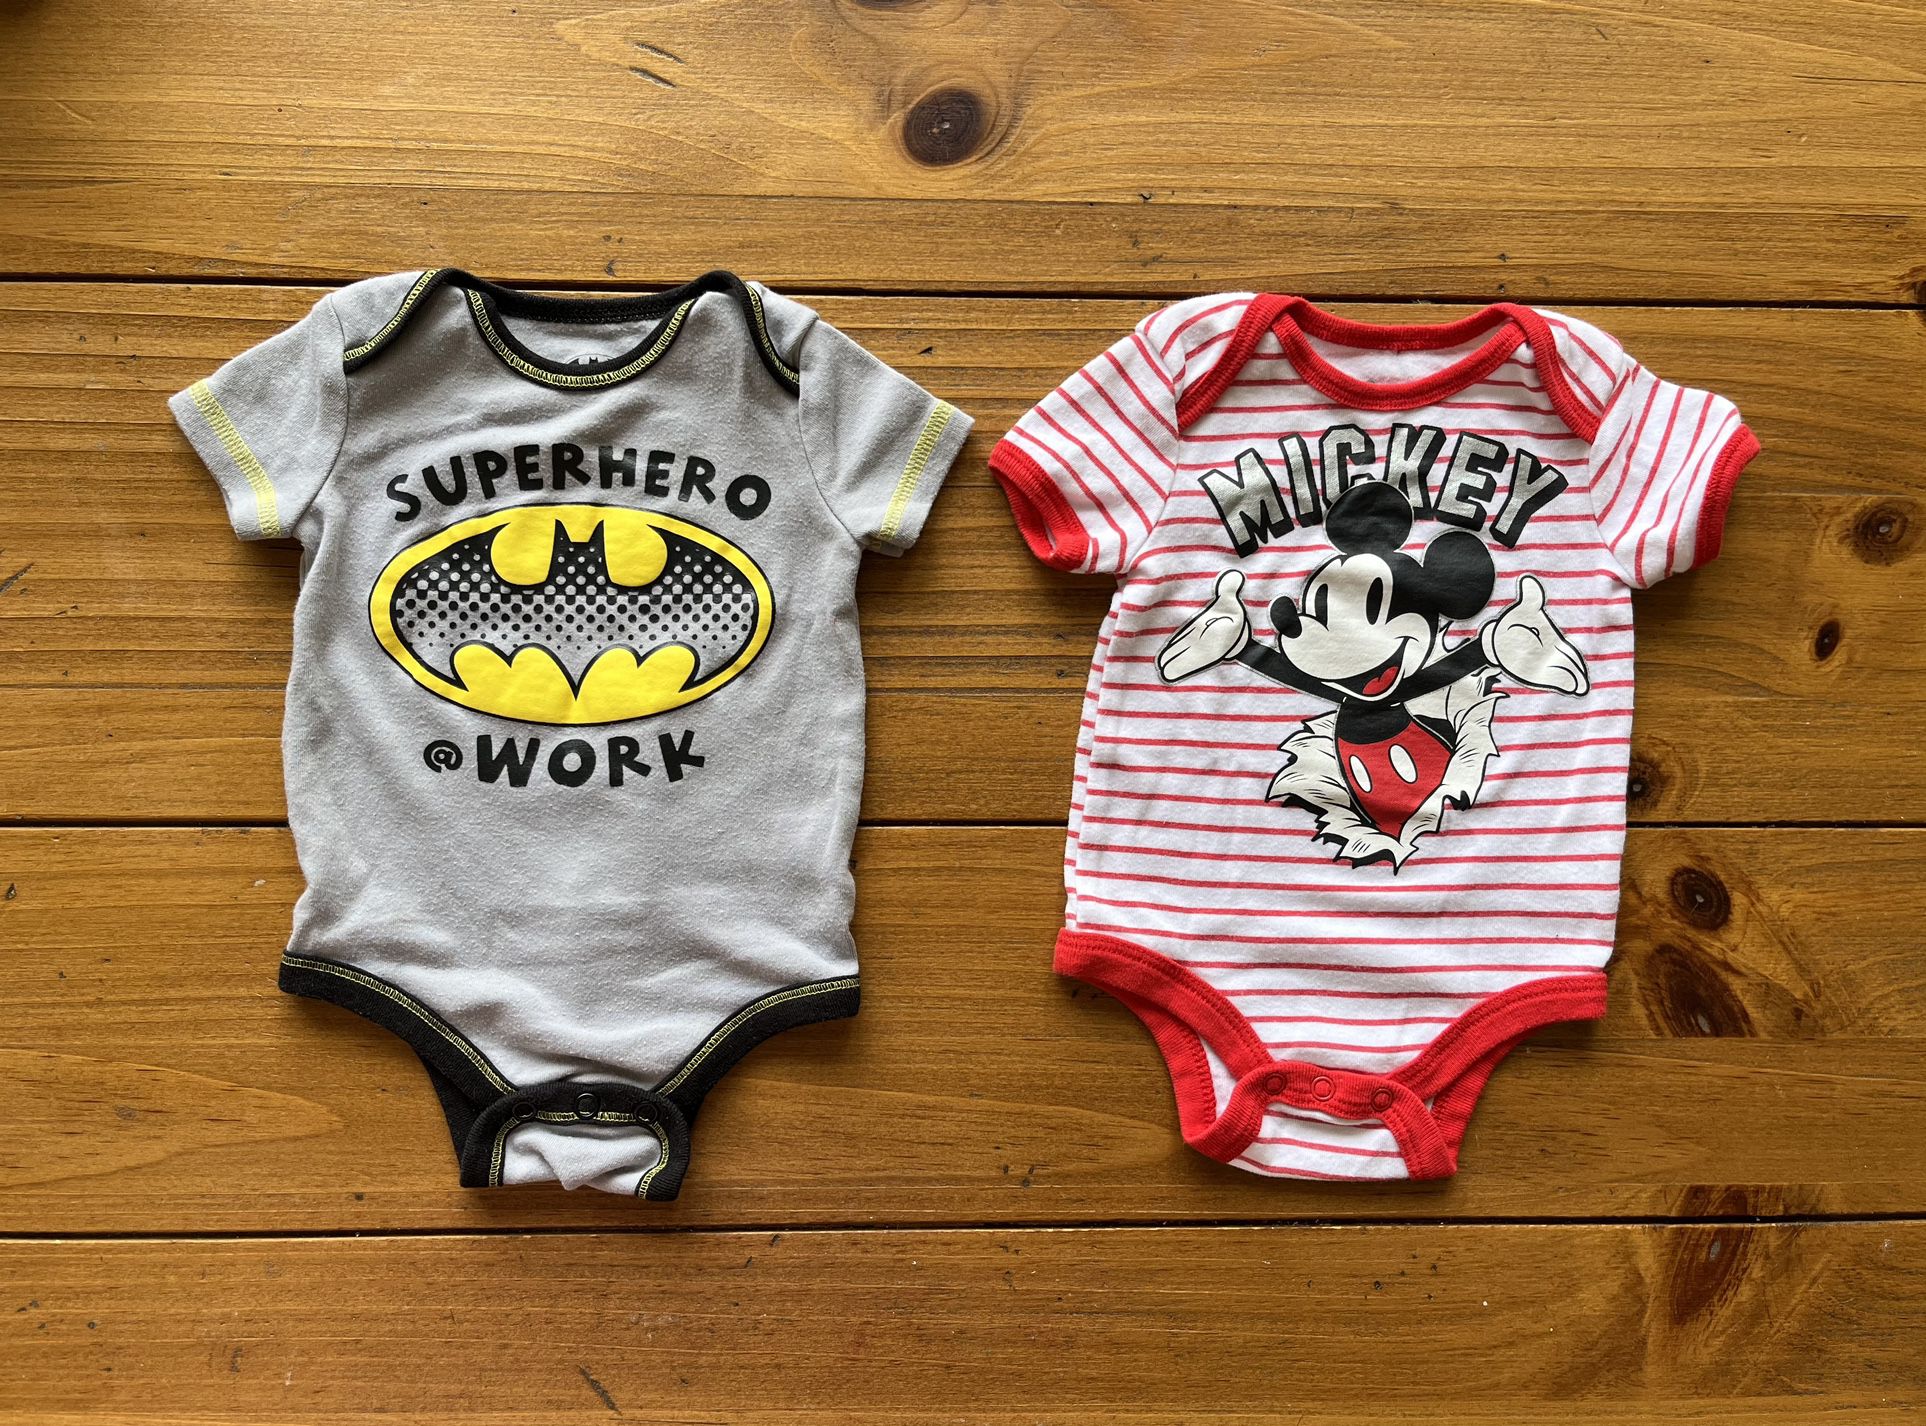 2 EUC Batman & Mickey Mouse baby onesies, size 3 months